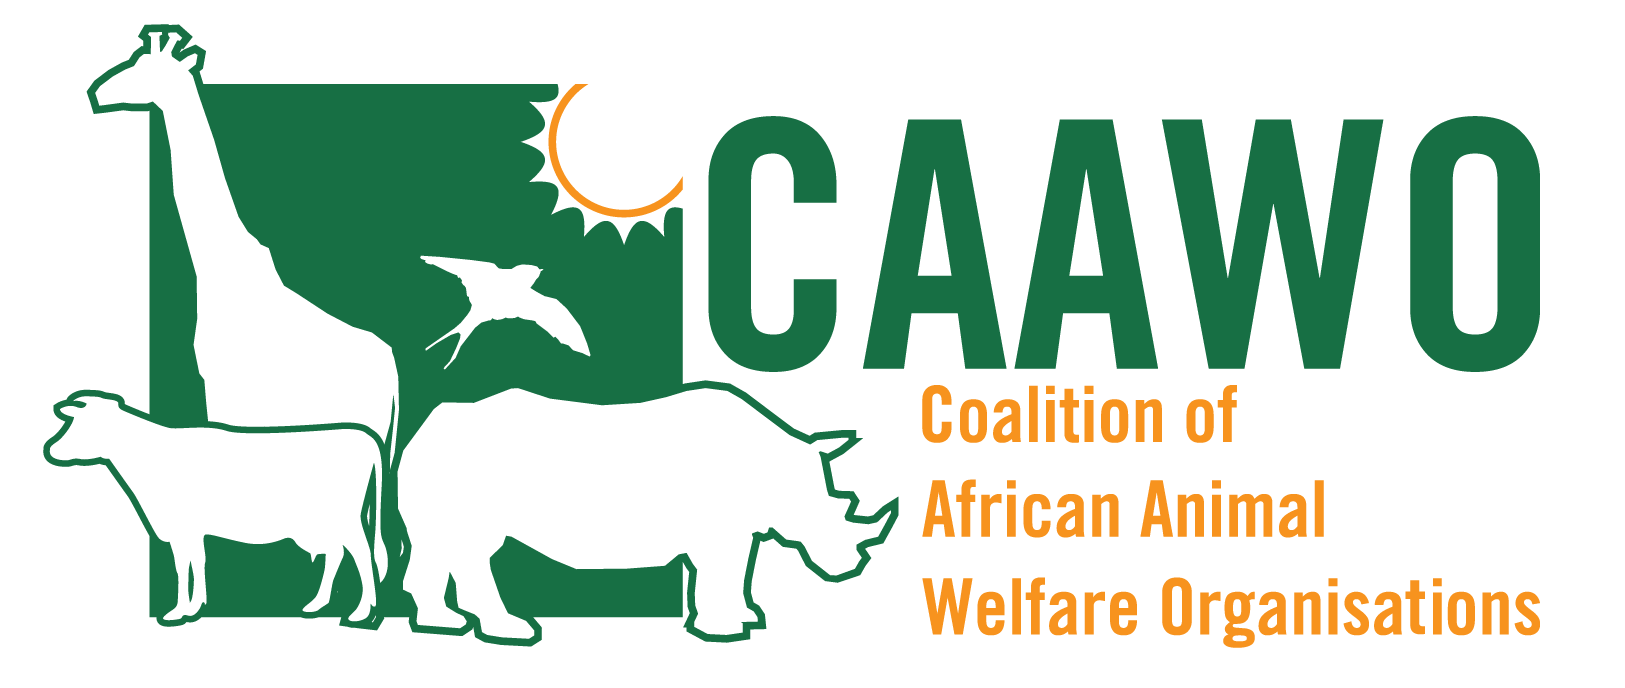 Coalition of African Animal Welfare Organisations